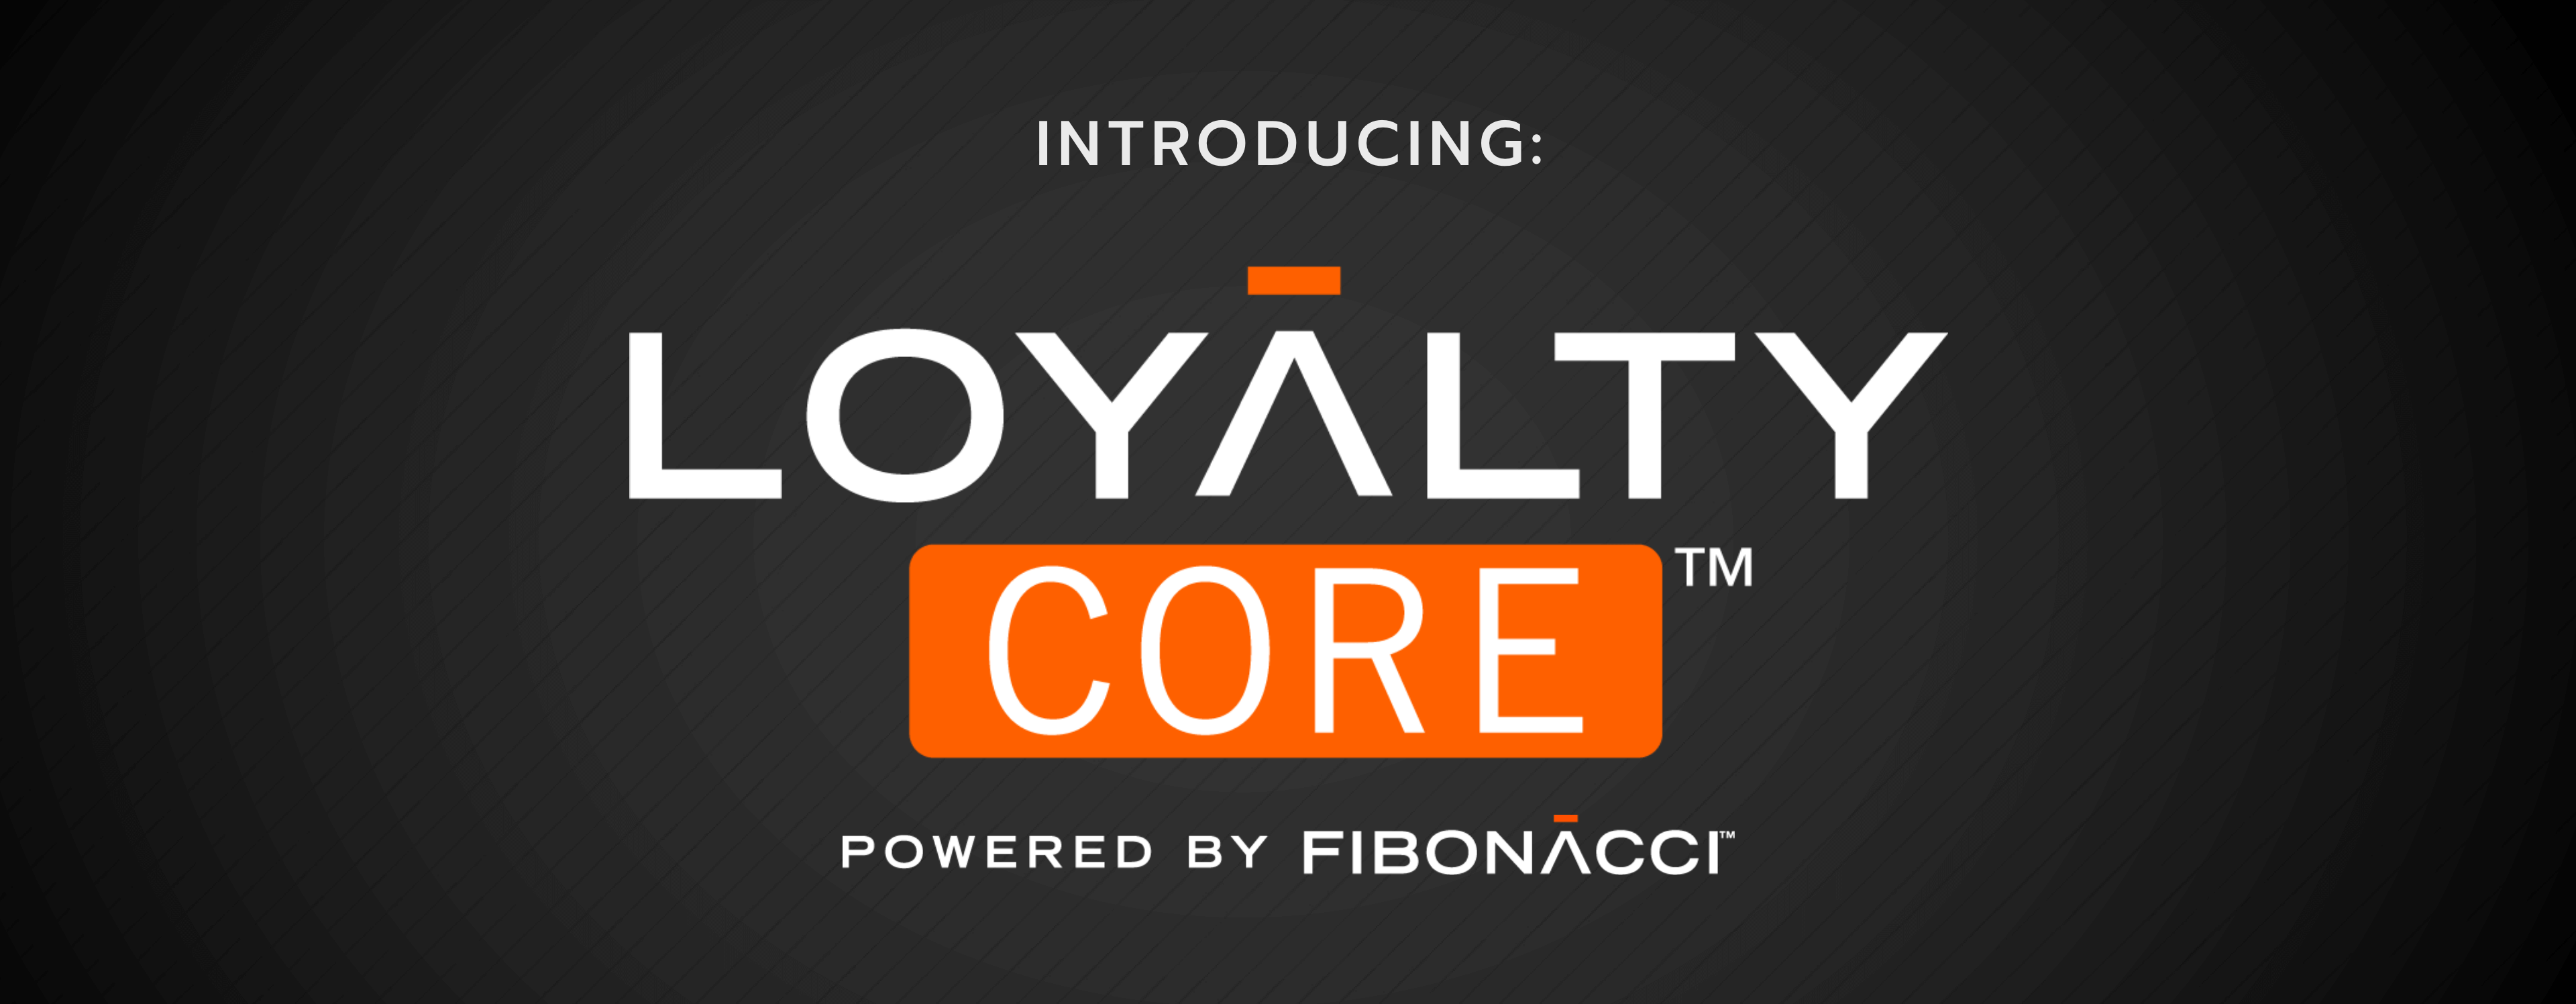 Introducing Loyalty Core Powered by Fibonacci